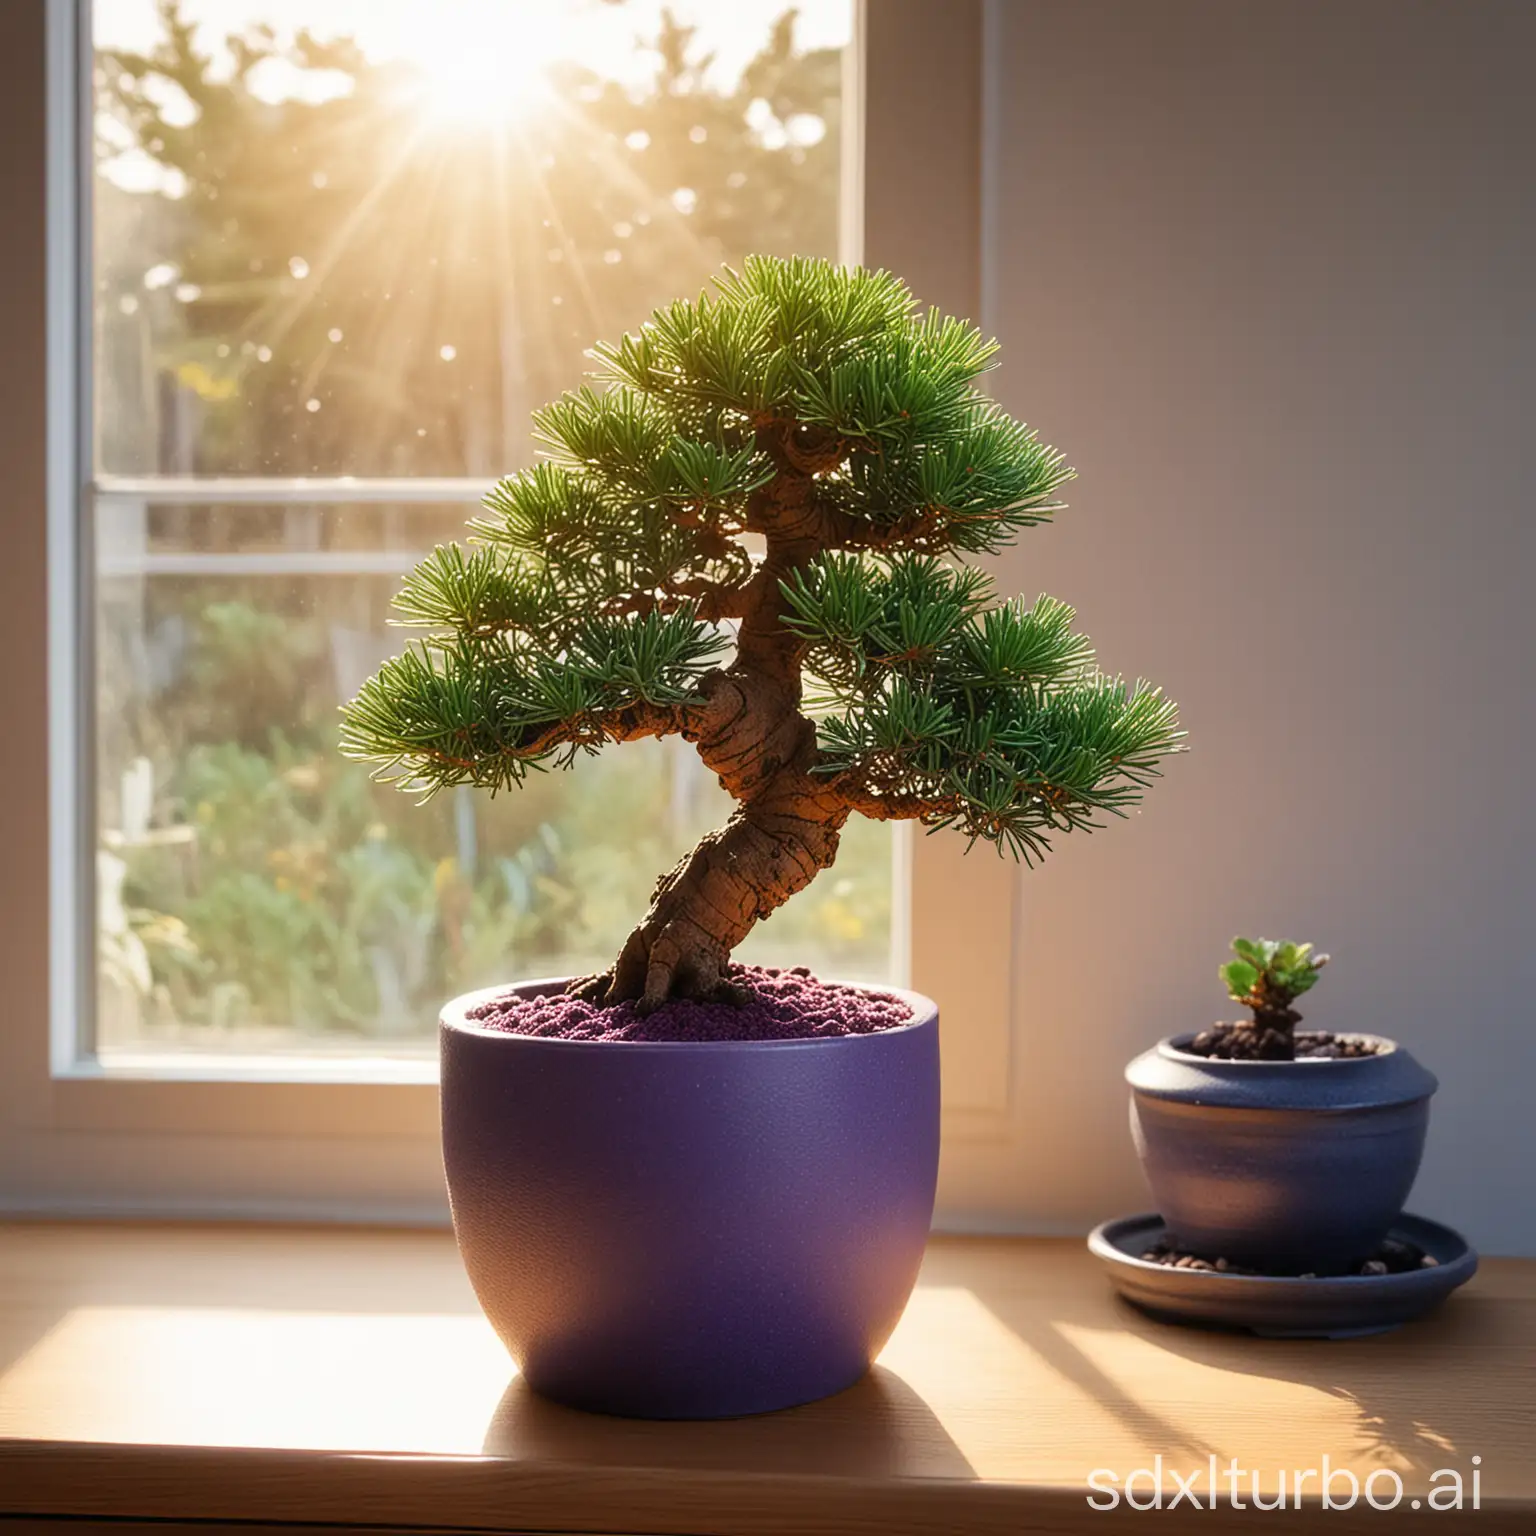 Sunlit-Purple-Bonsai-in-Living-Room-Setting